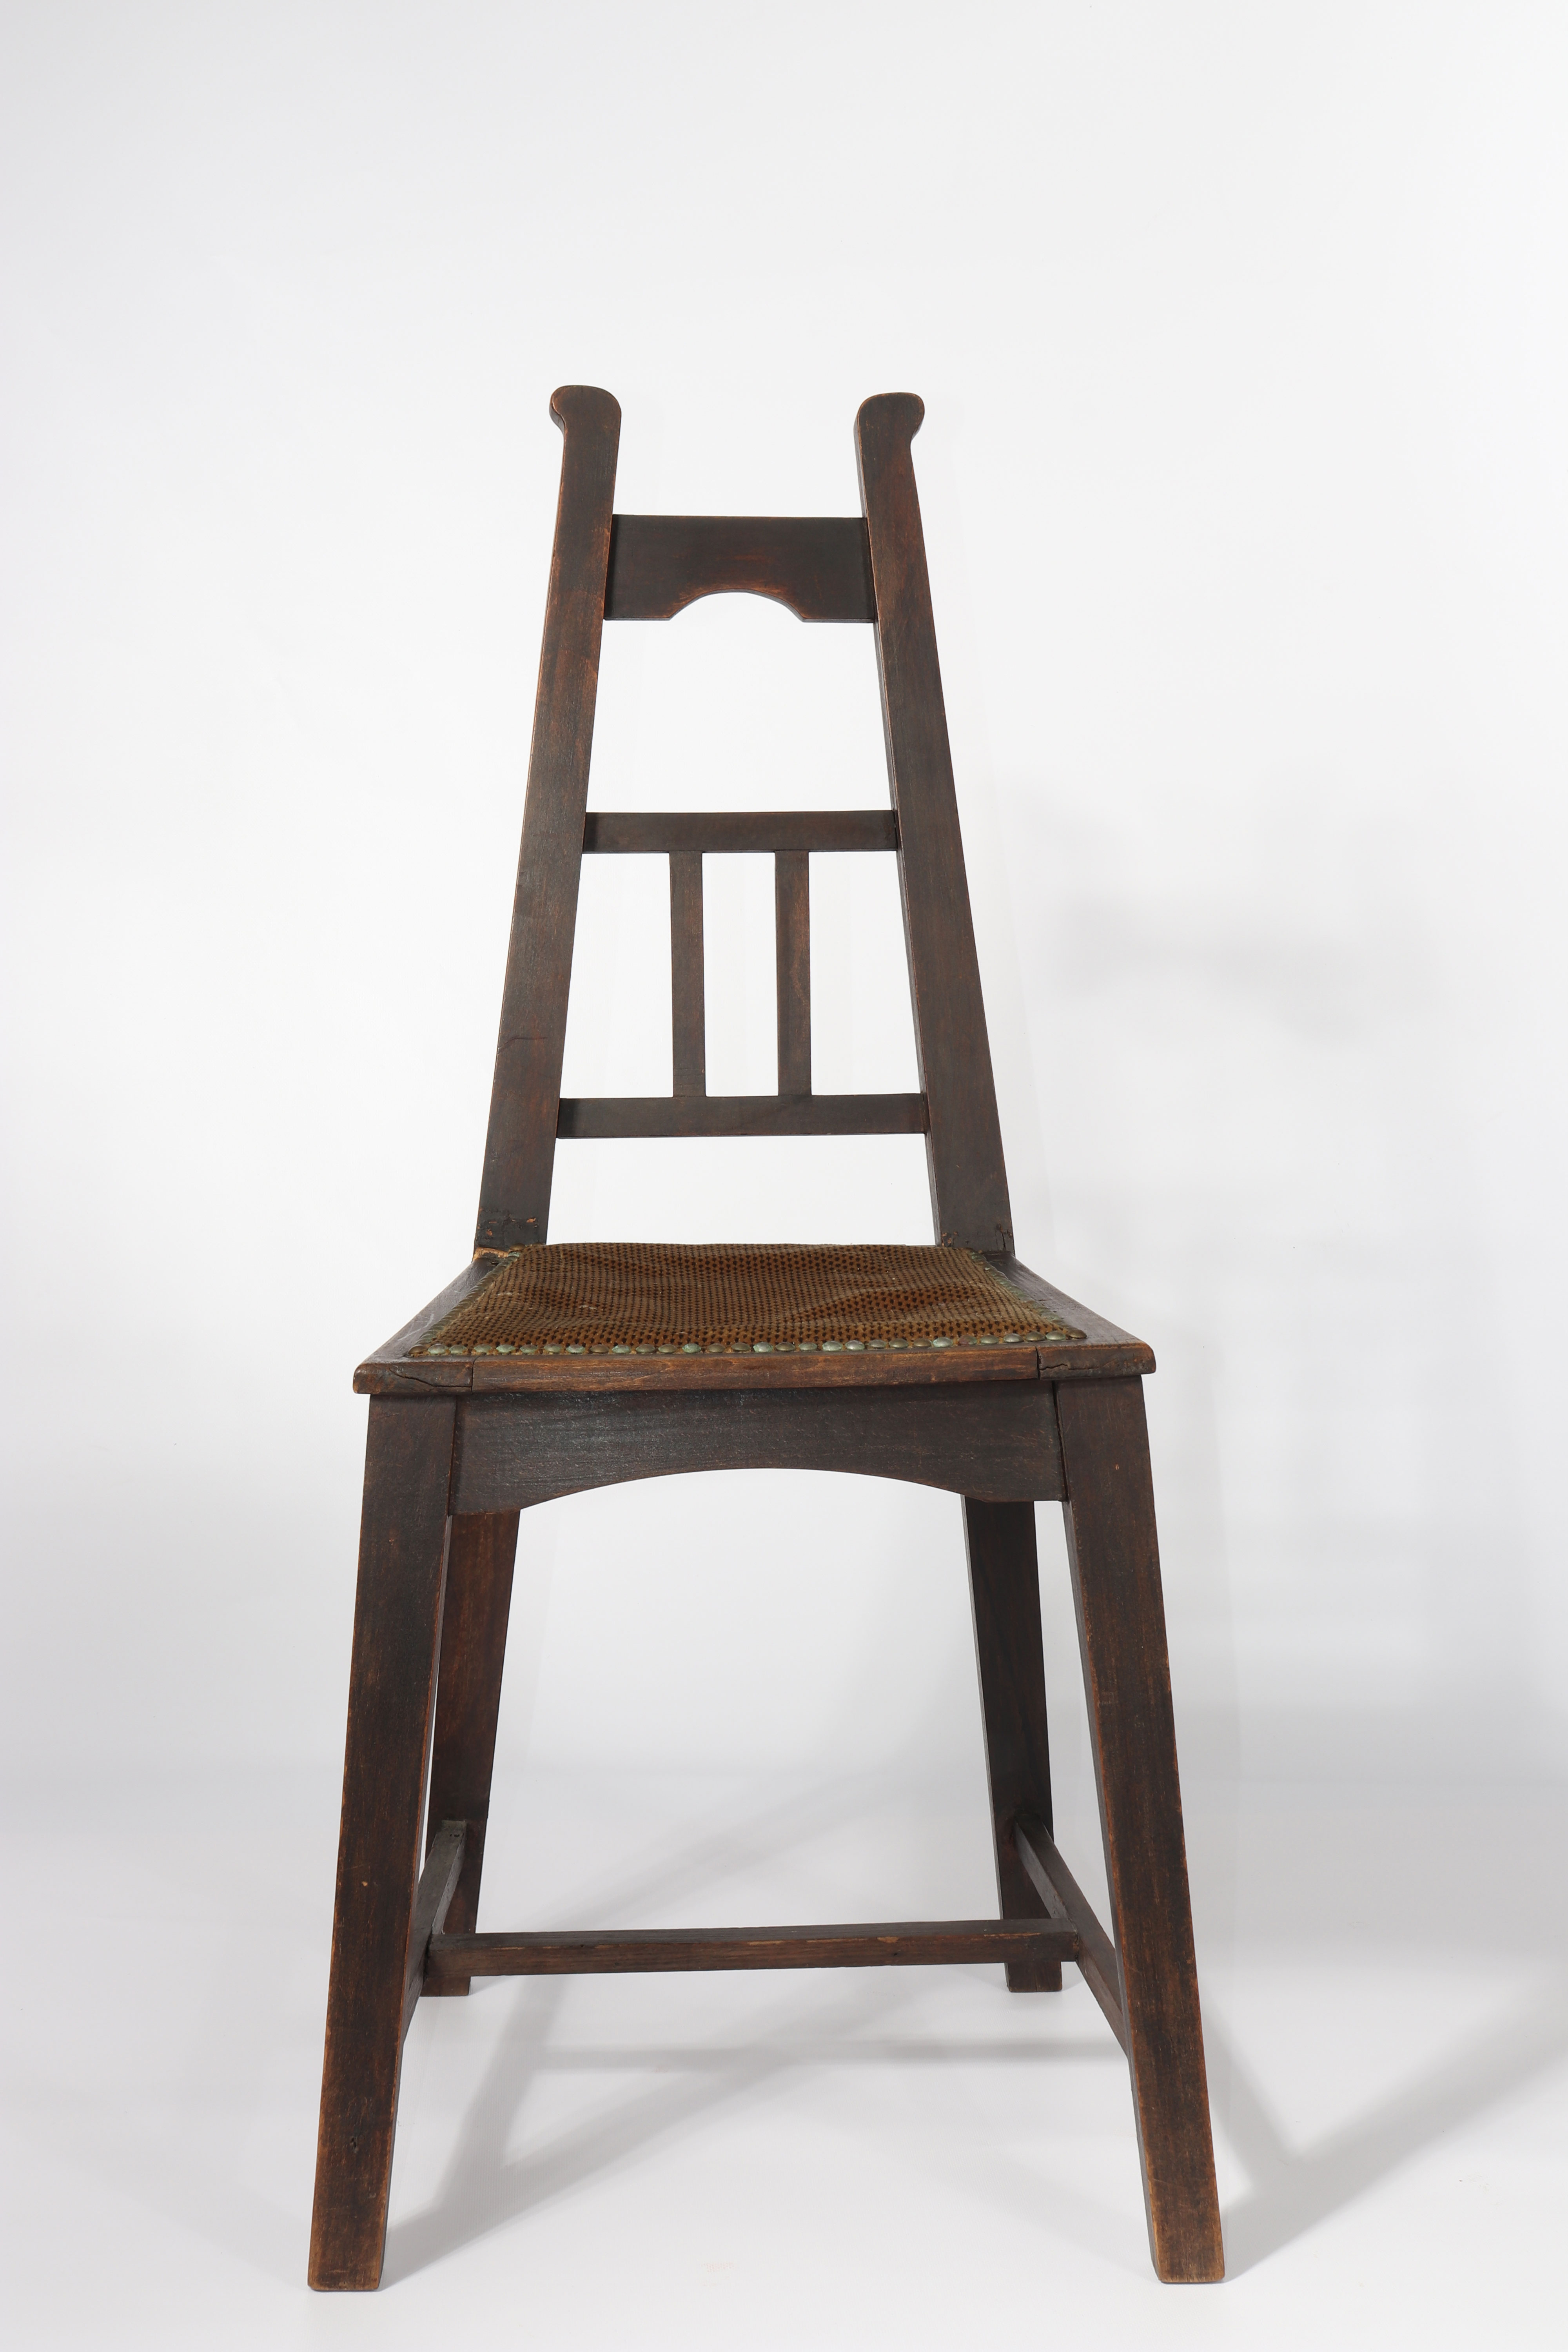 Chair around 1900 - Image 2 of 4